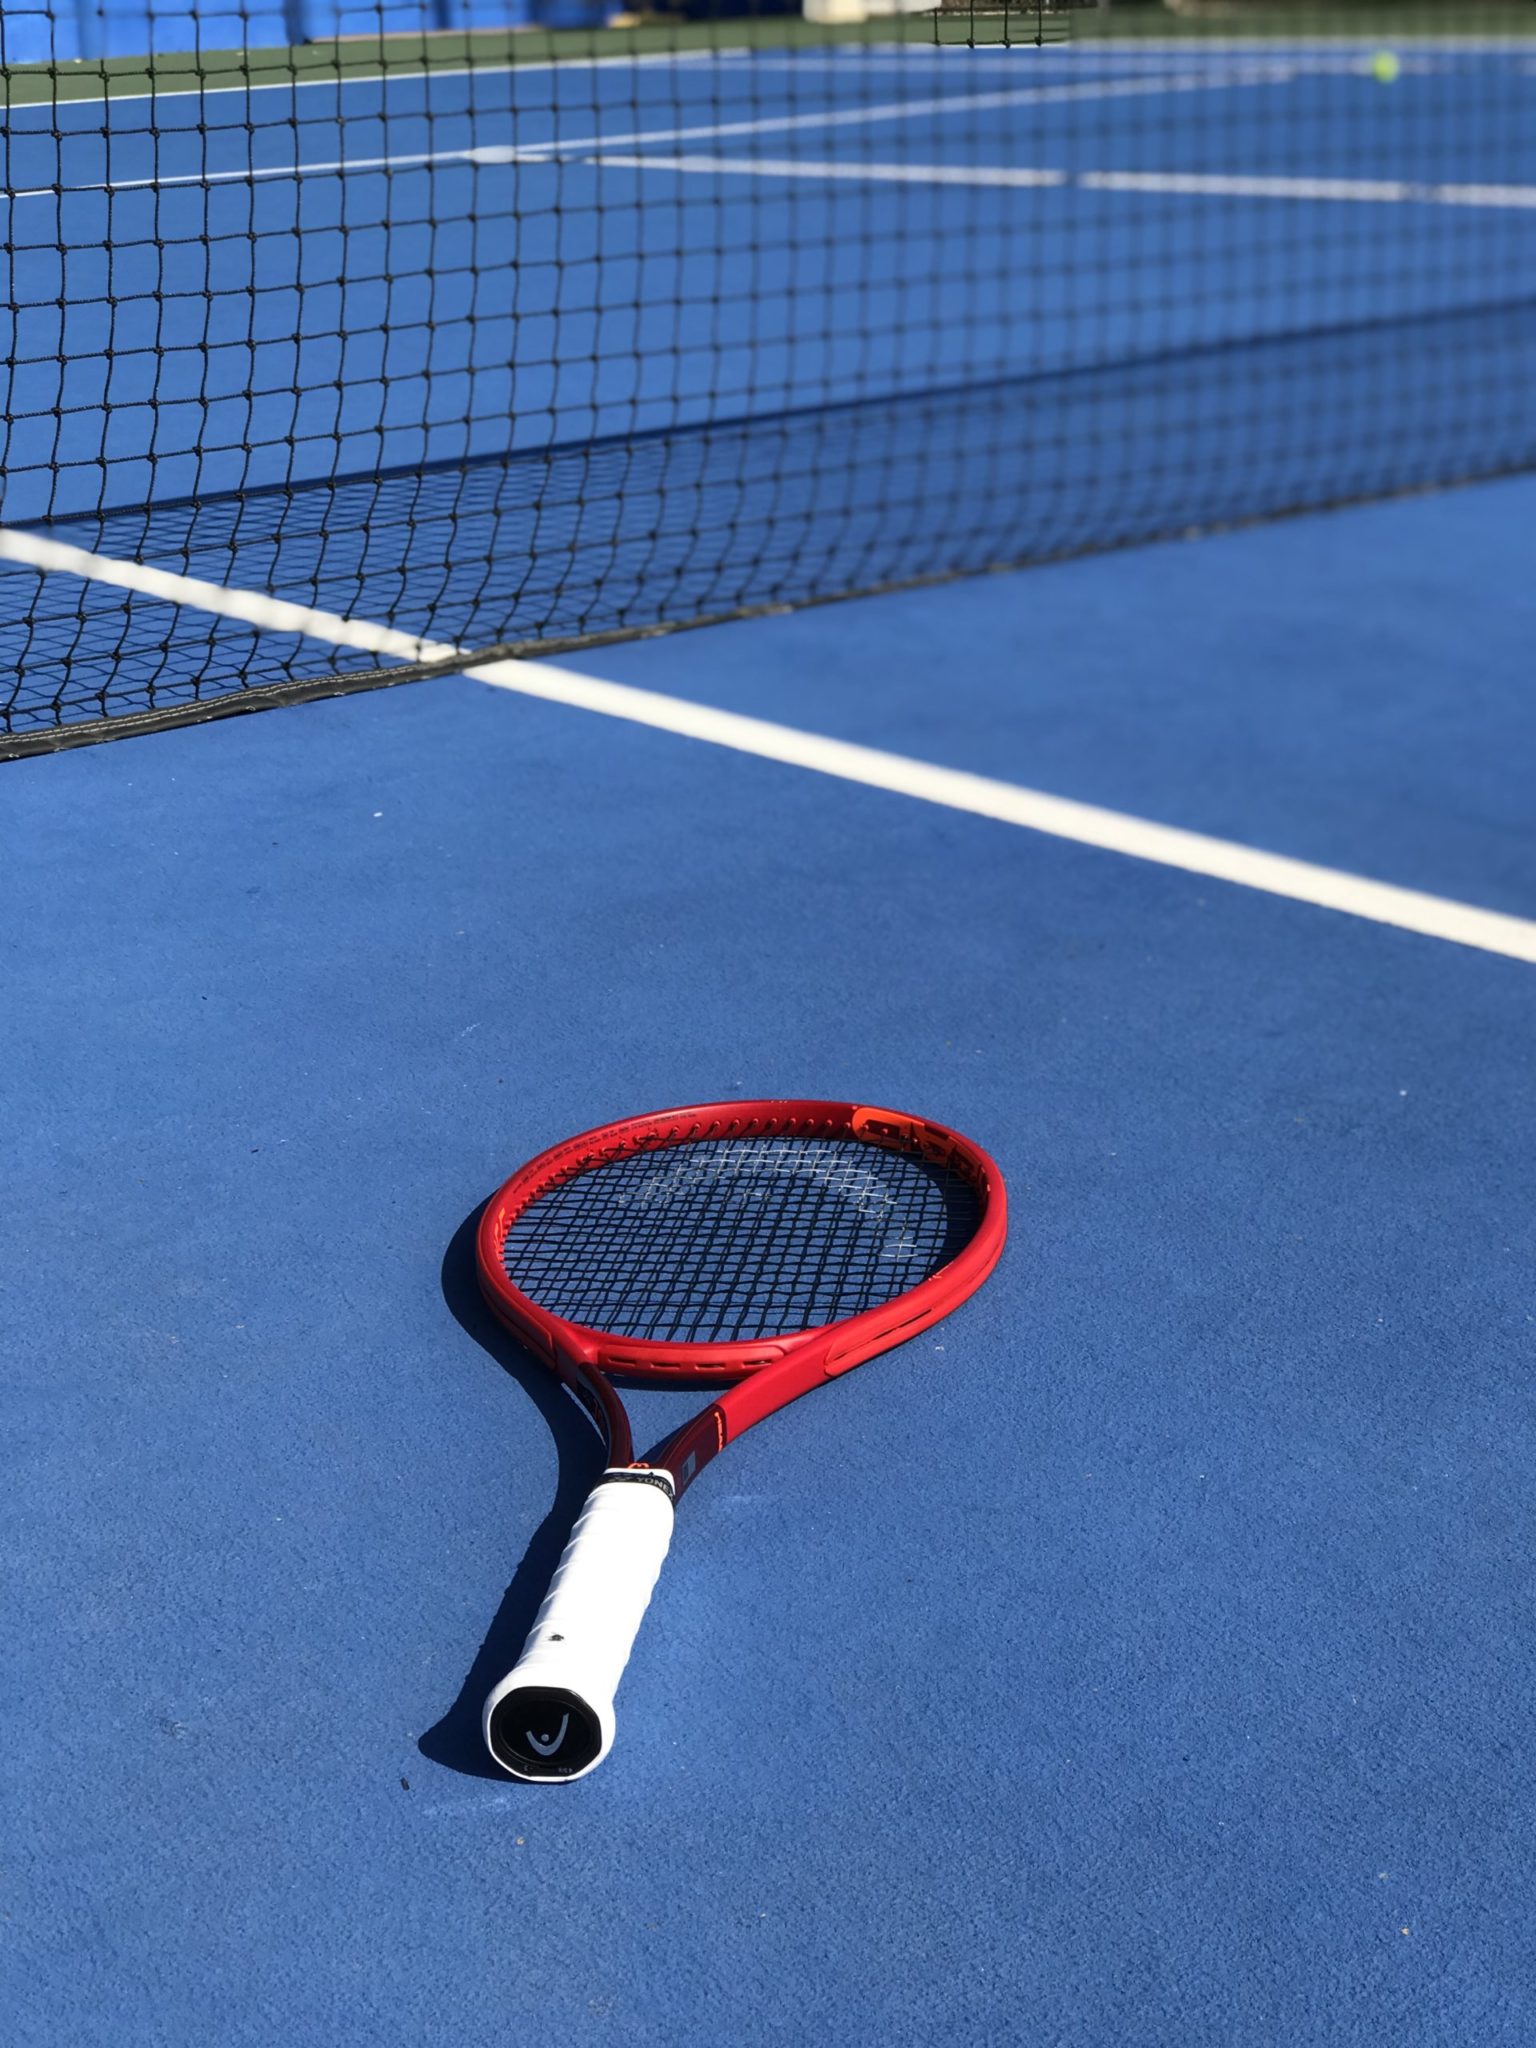 New HEAD Prestige Racquets - Tennisnerd.net A Tennisnerd review